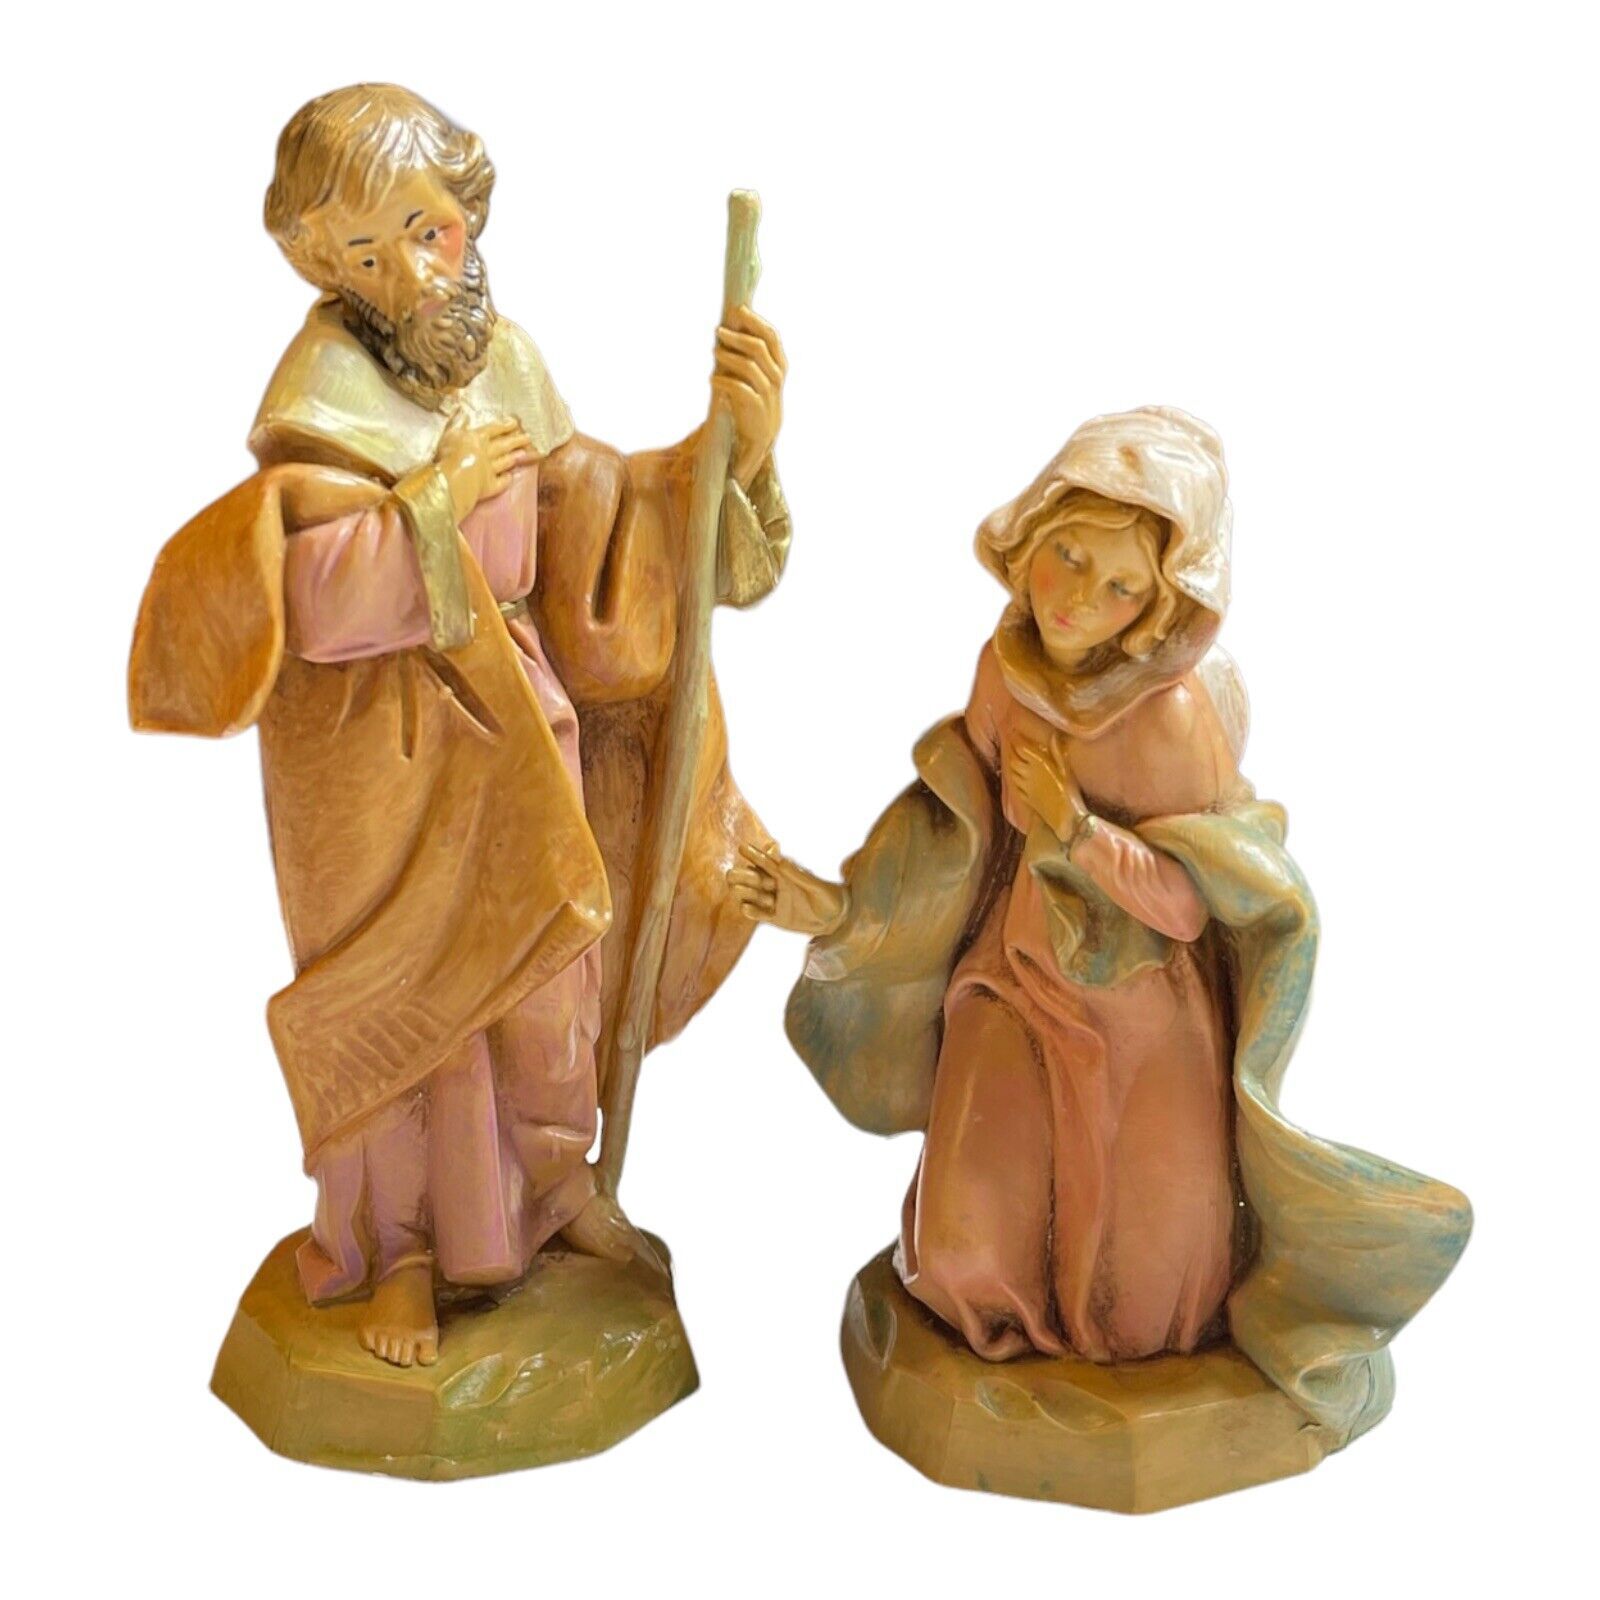 Primary image for Vintage Fontanini 1991 Mary & Joseph Depose #2 Italy Nativity Figurine 5" Scale